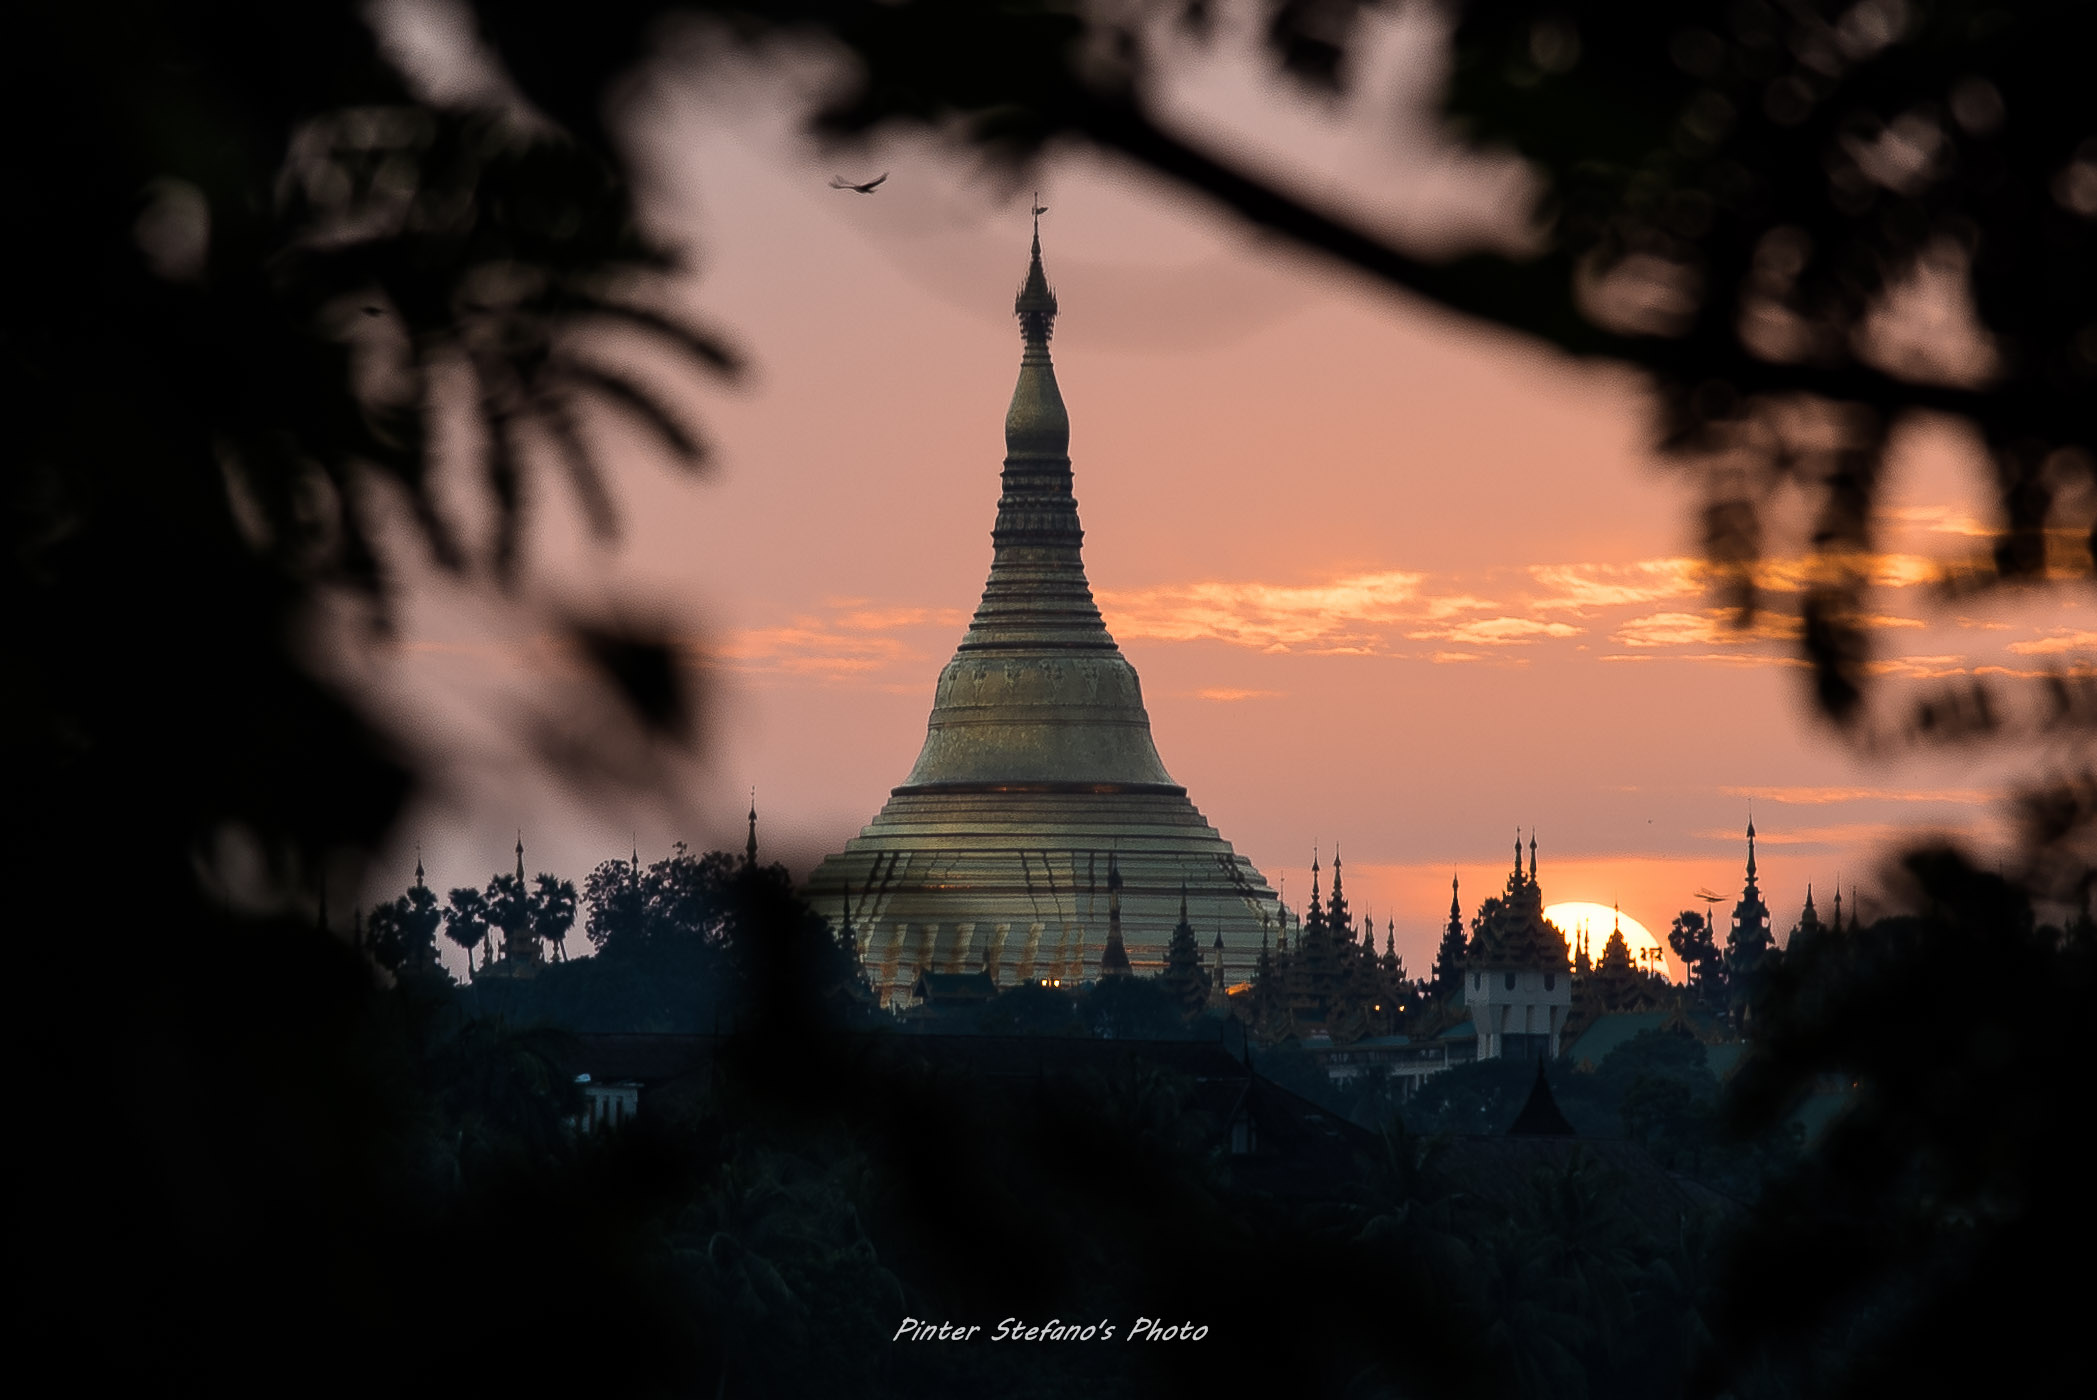 A sunset in Yangon...